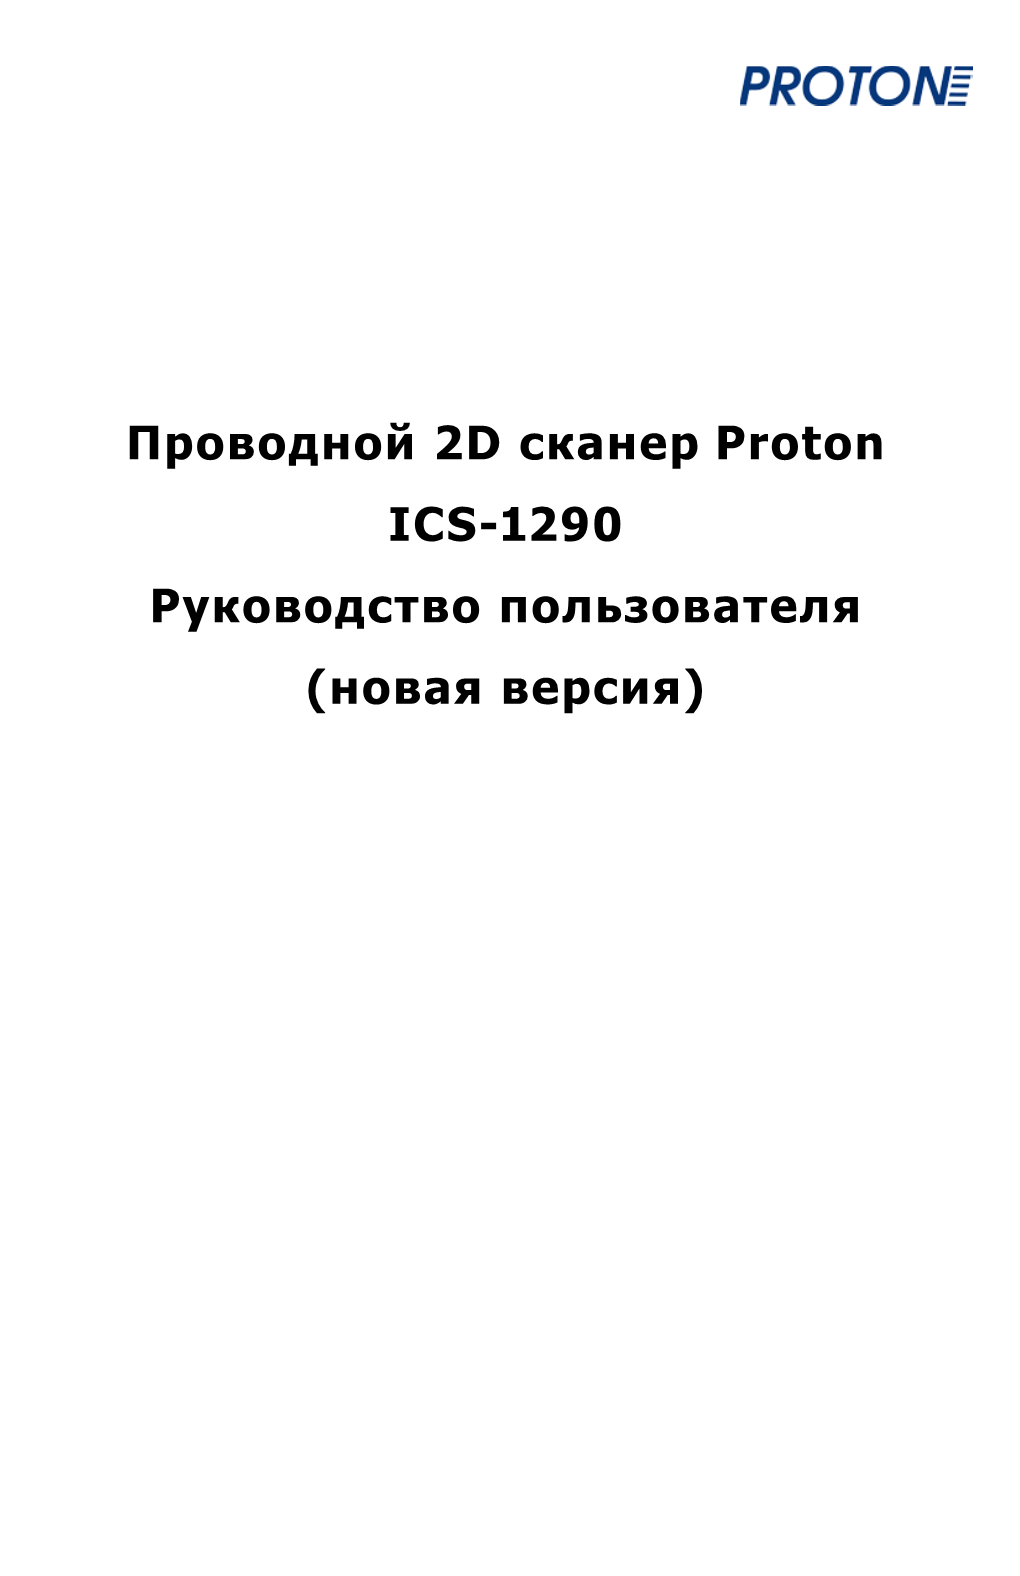 Protone ICS-1290